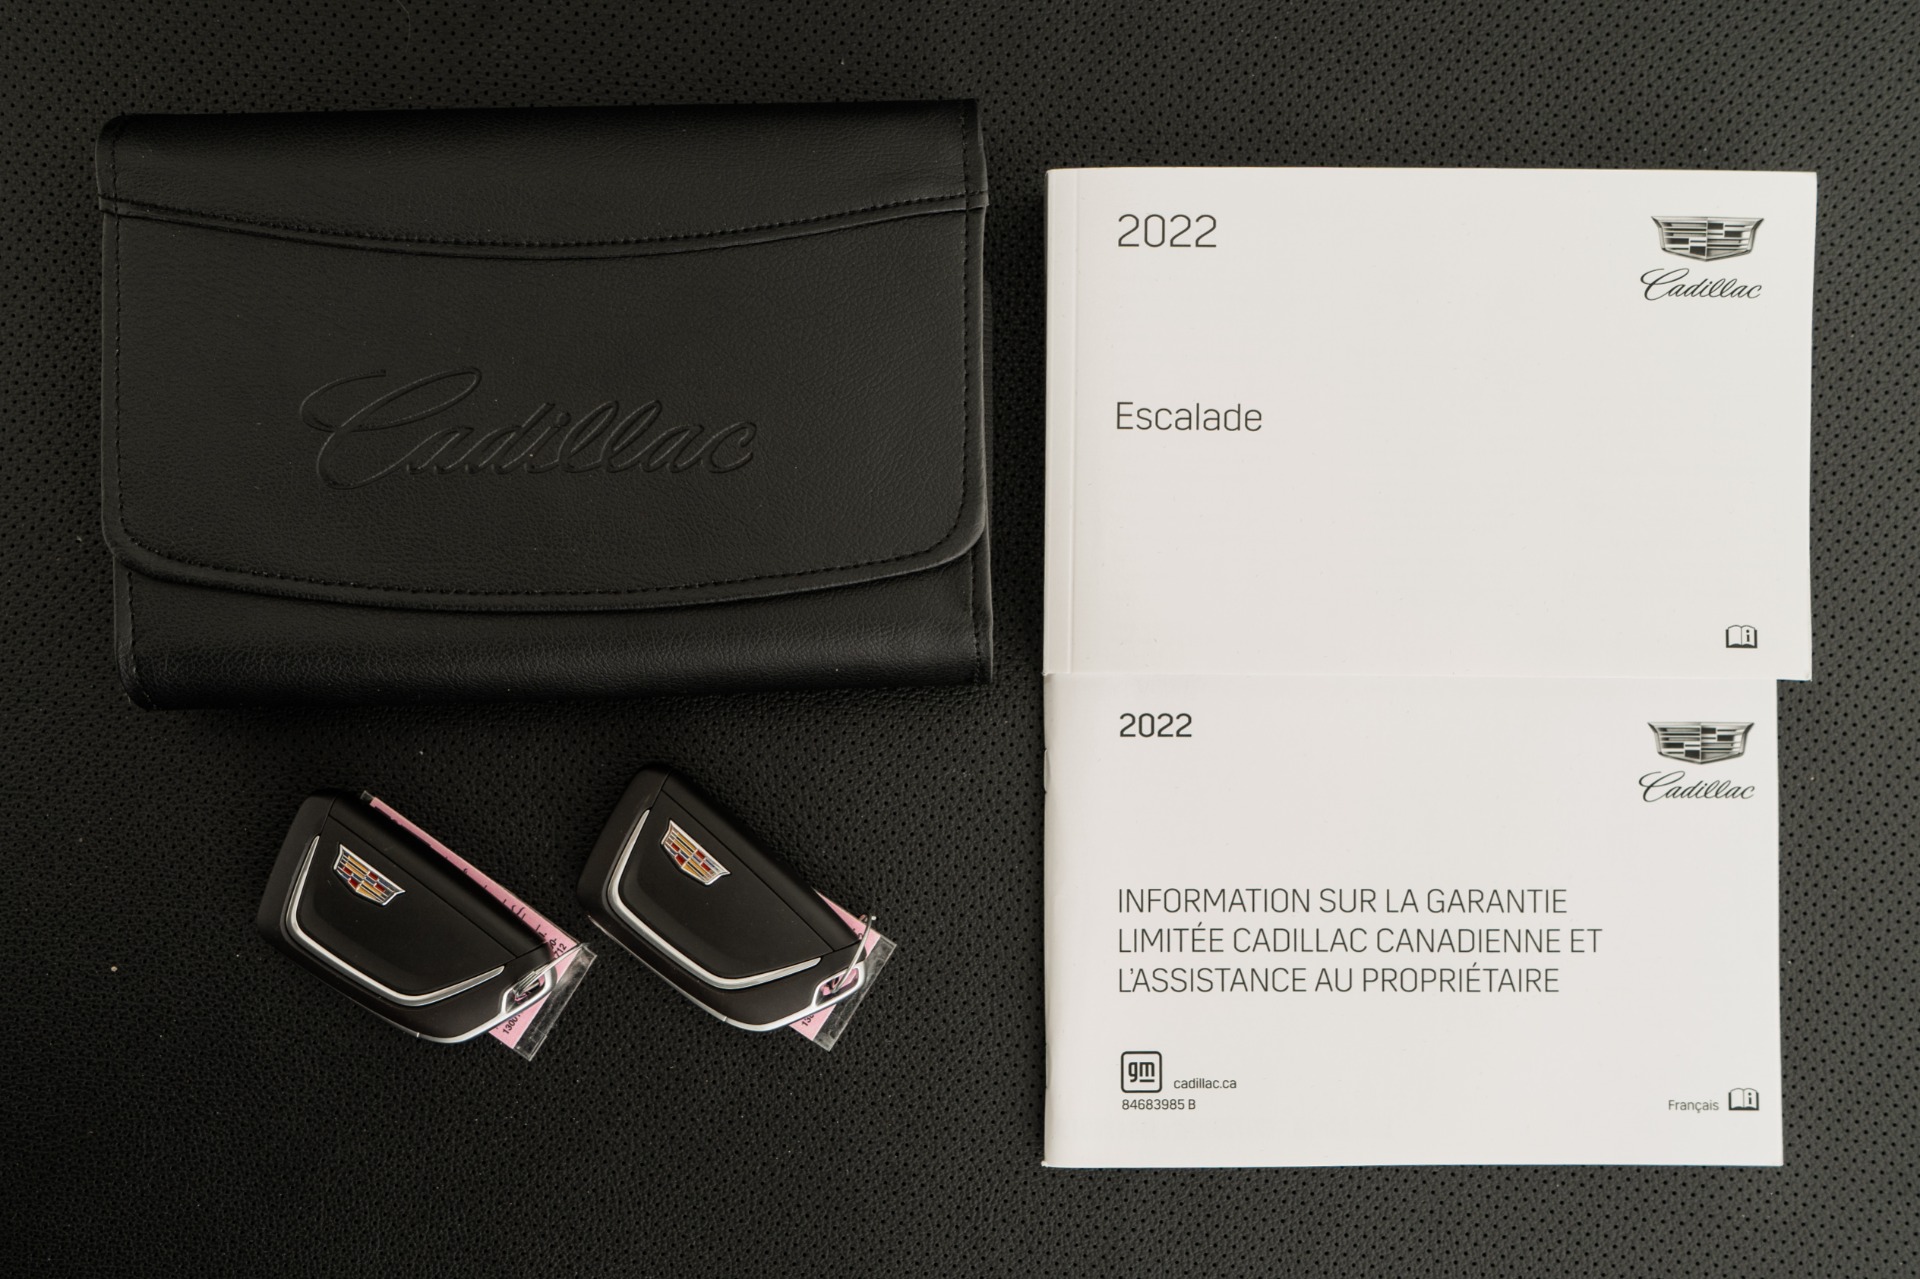 Car note case leather Bordeaux NEW vehicle license folder ID case EC cards